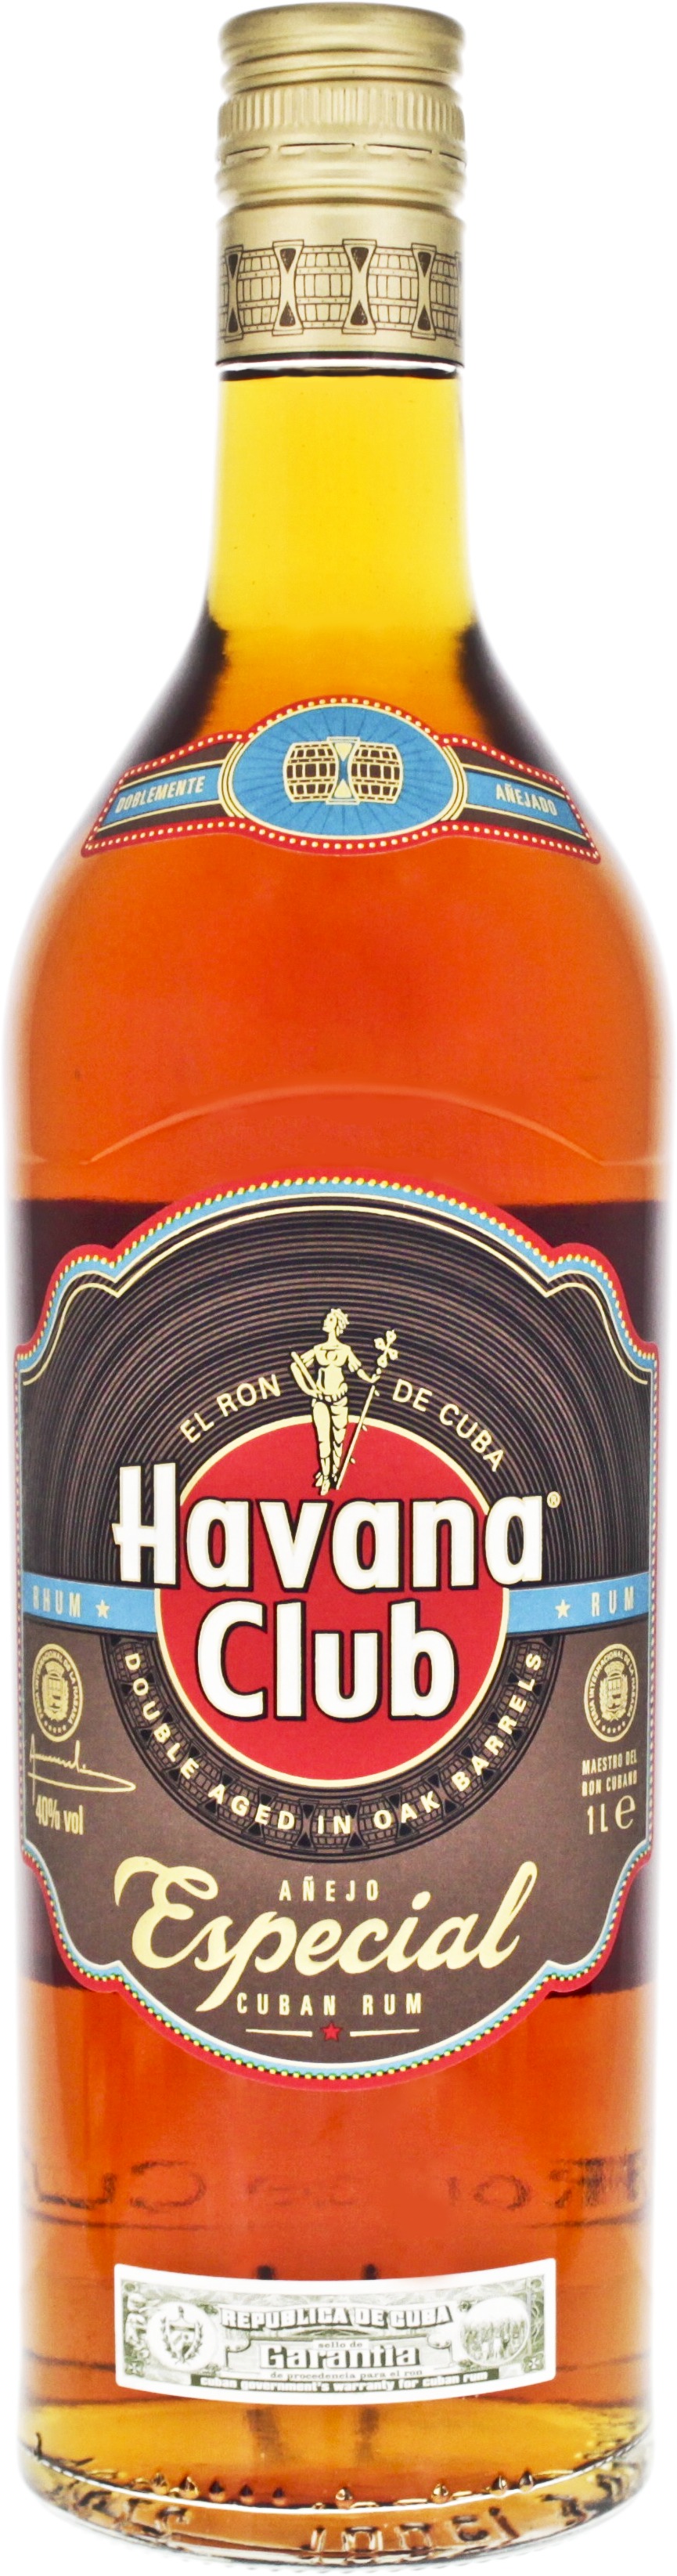 Havana Club Anejo Especial Cuban Rum 40% 1L in duty-free at bordershop Chop  Tysa | Rum